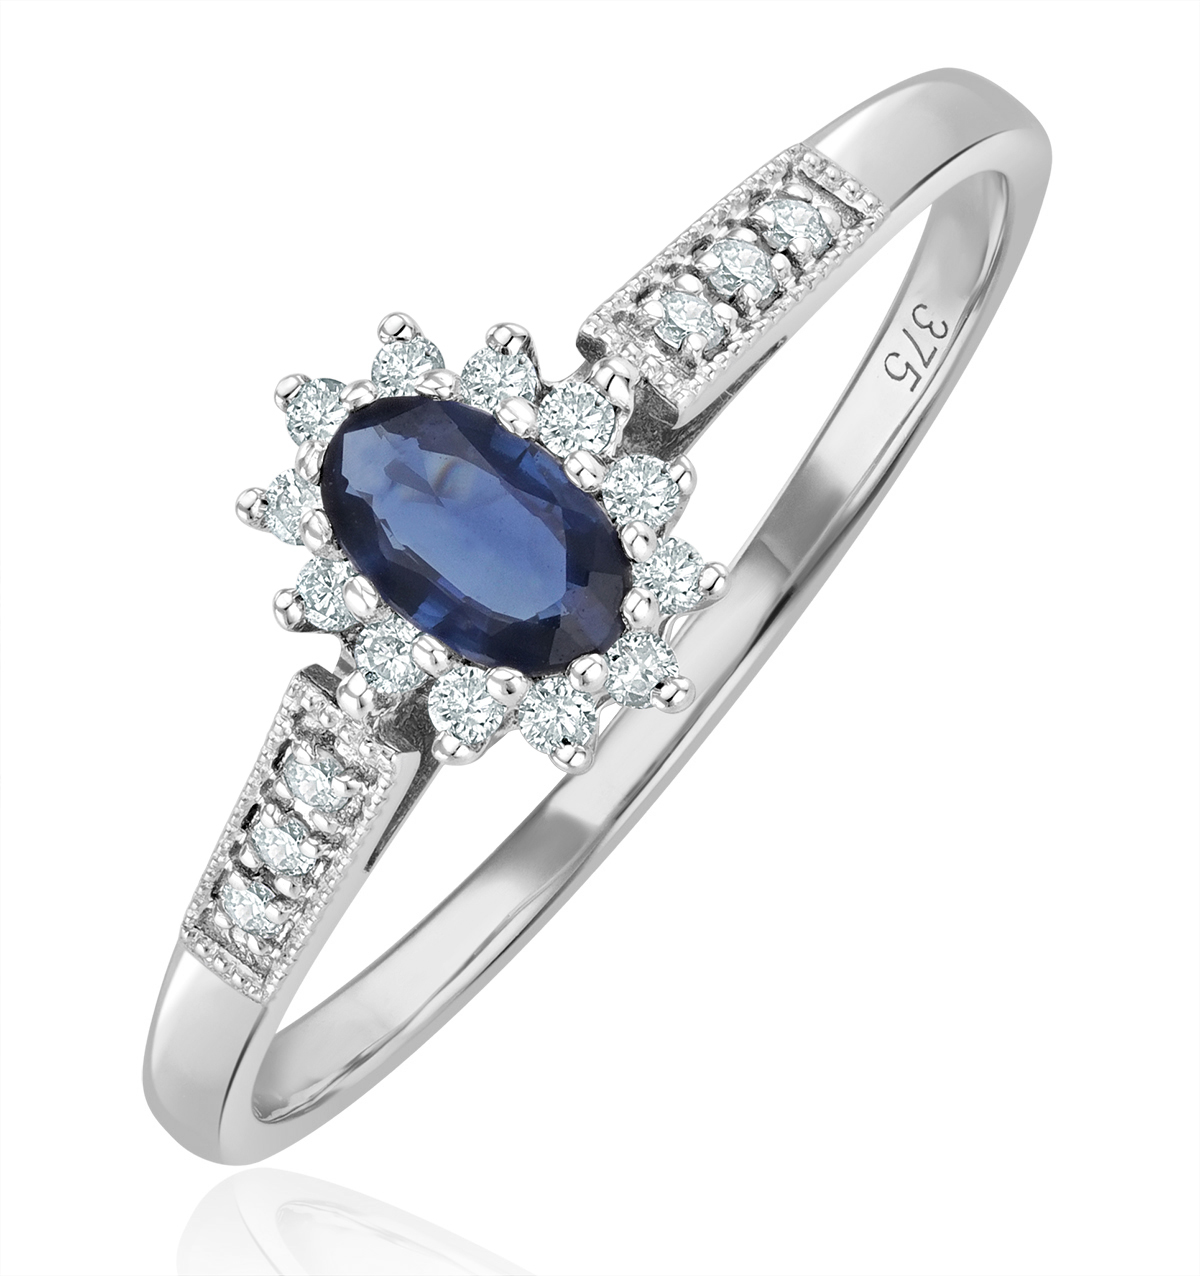 Genuine Sapphire Silver Solid Blue Ring Mark 6 Carat Size H,I,M,P,R,S,T,U,W,X,Z 